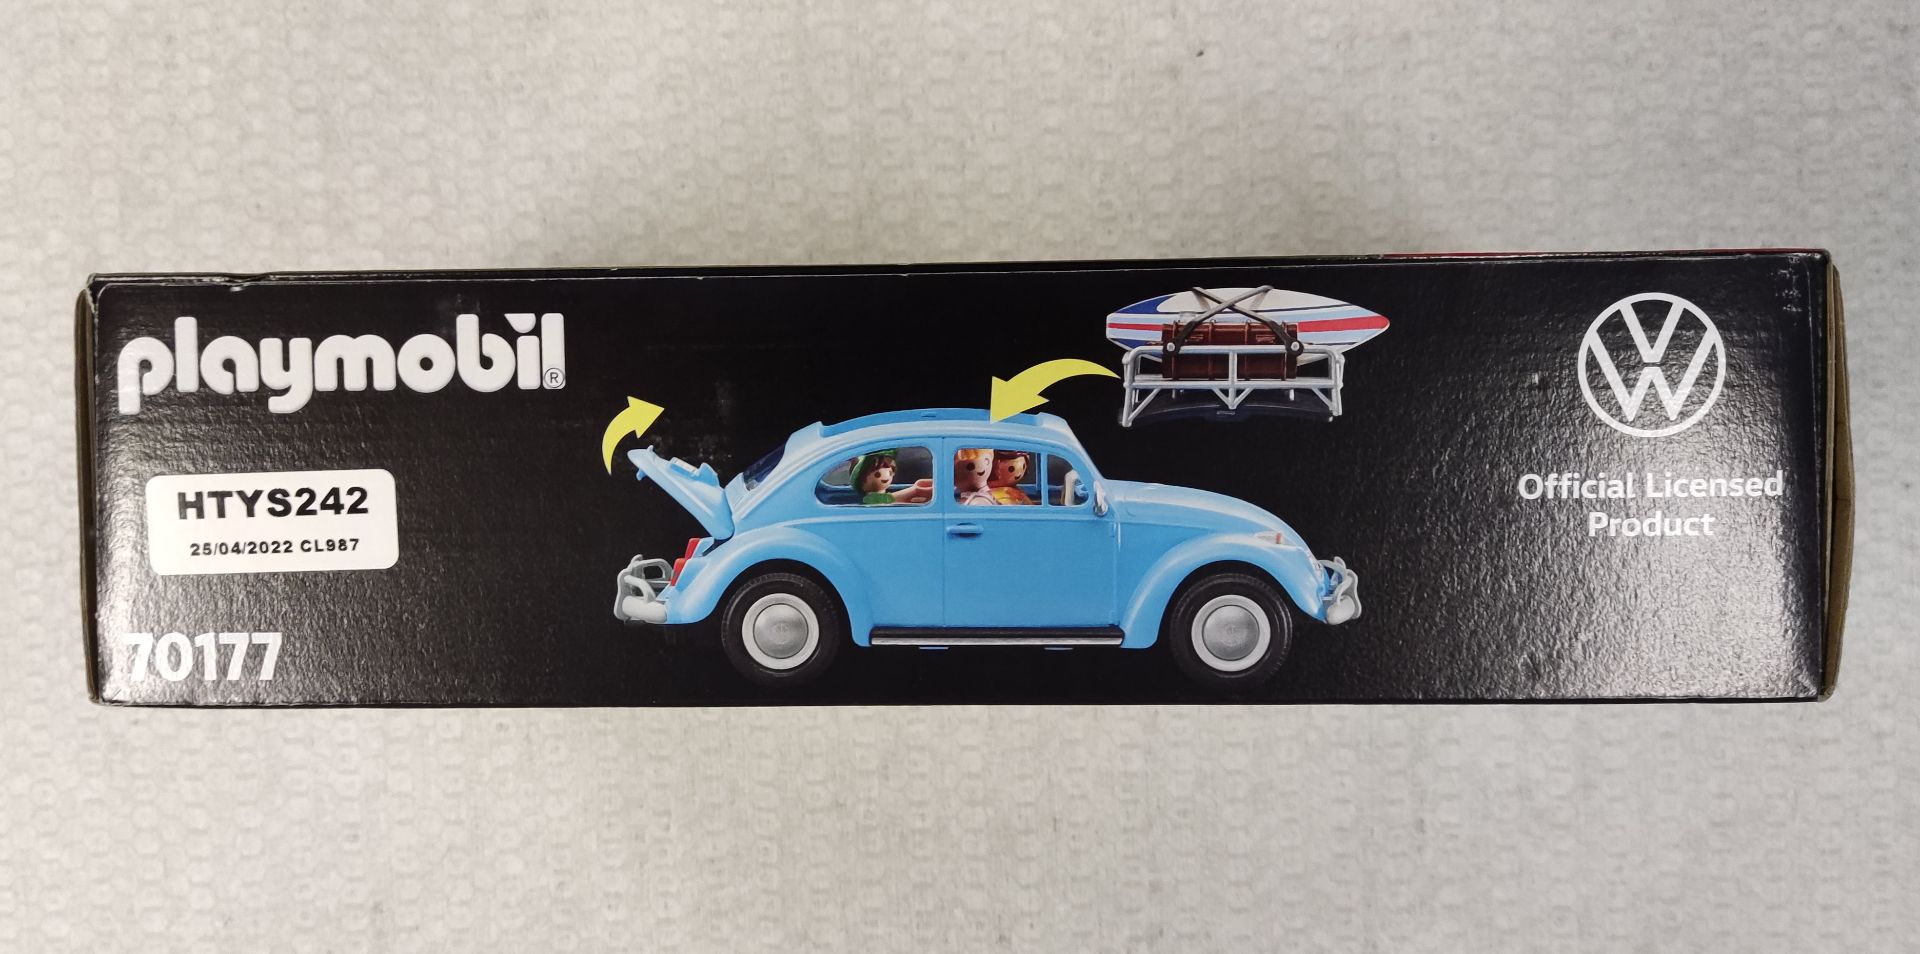 1 x Playmobil Volkswagen Beetle - Model 70177 - New/Boxed - Image 4 of 6